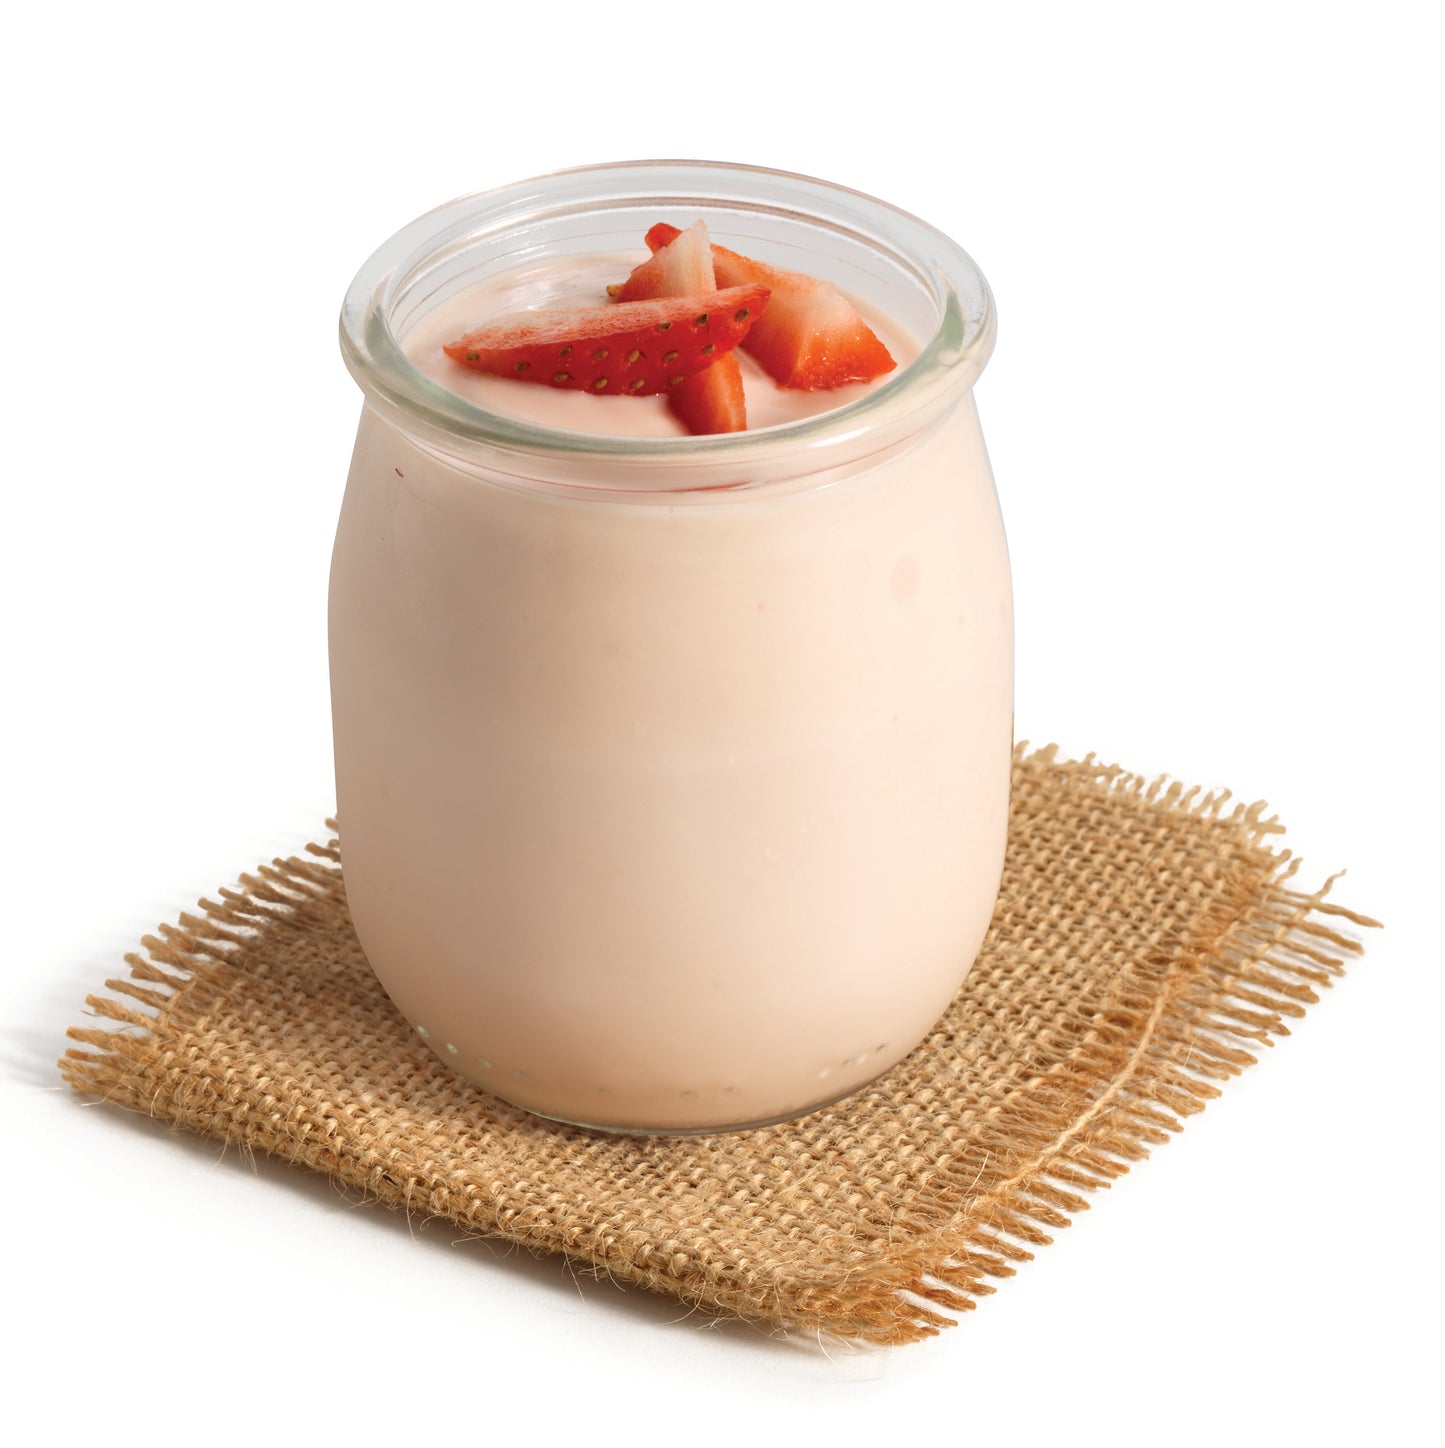 Thick & Creamy Strawberry Yoghurt x12 Sachets